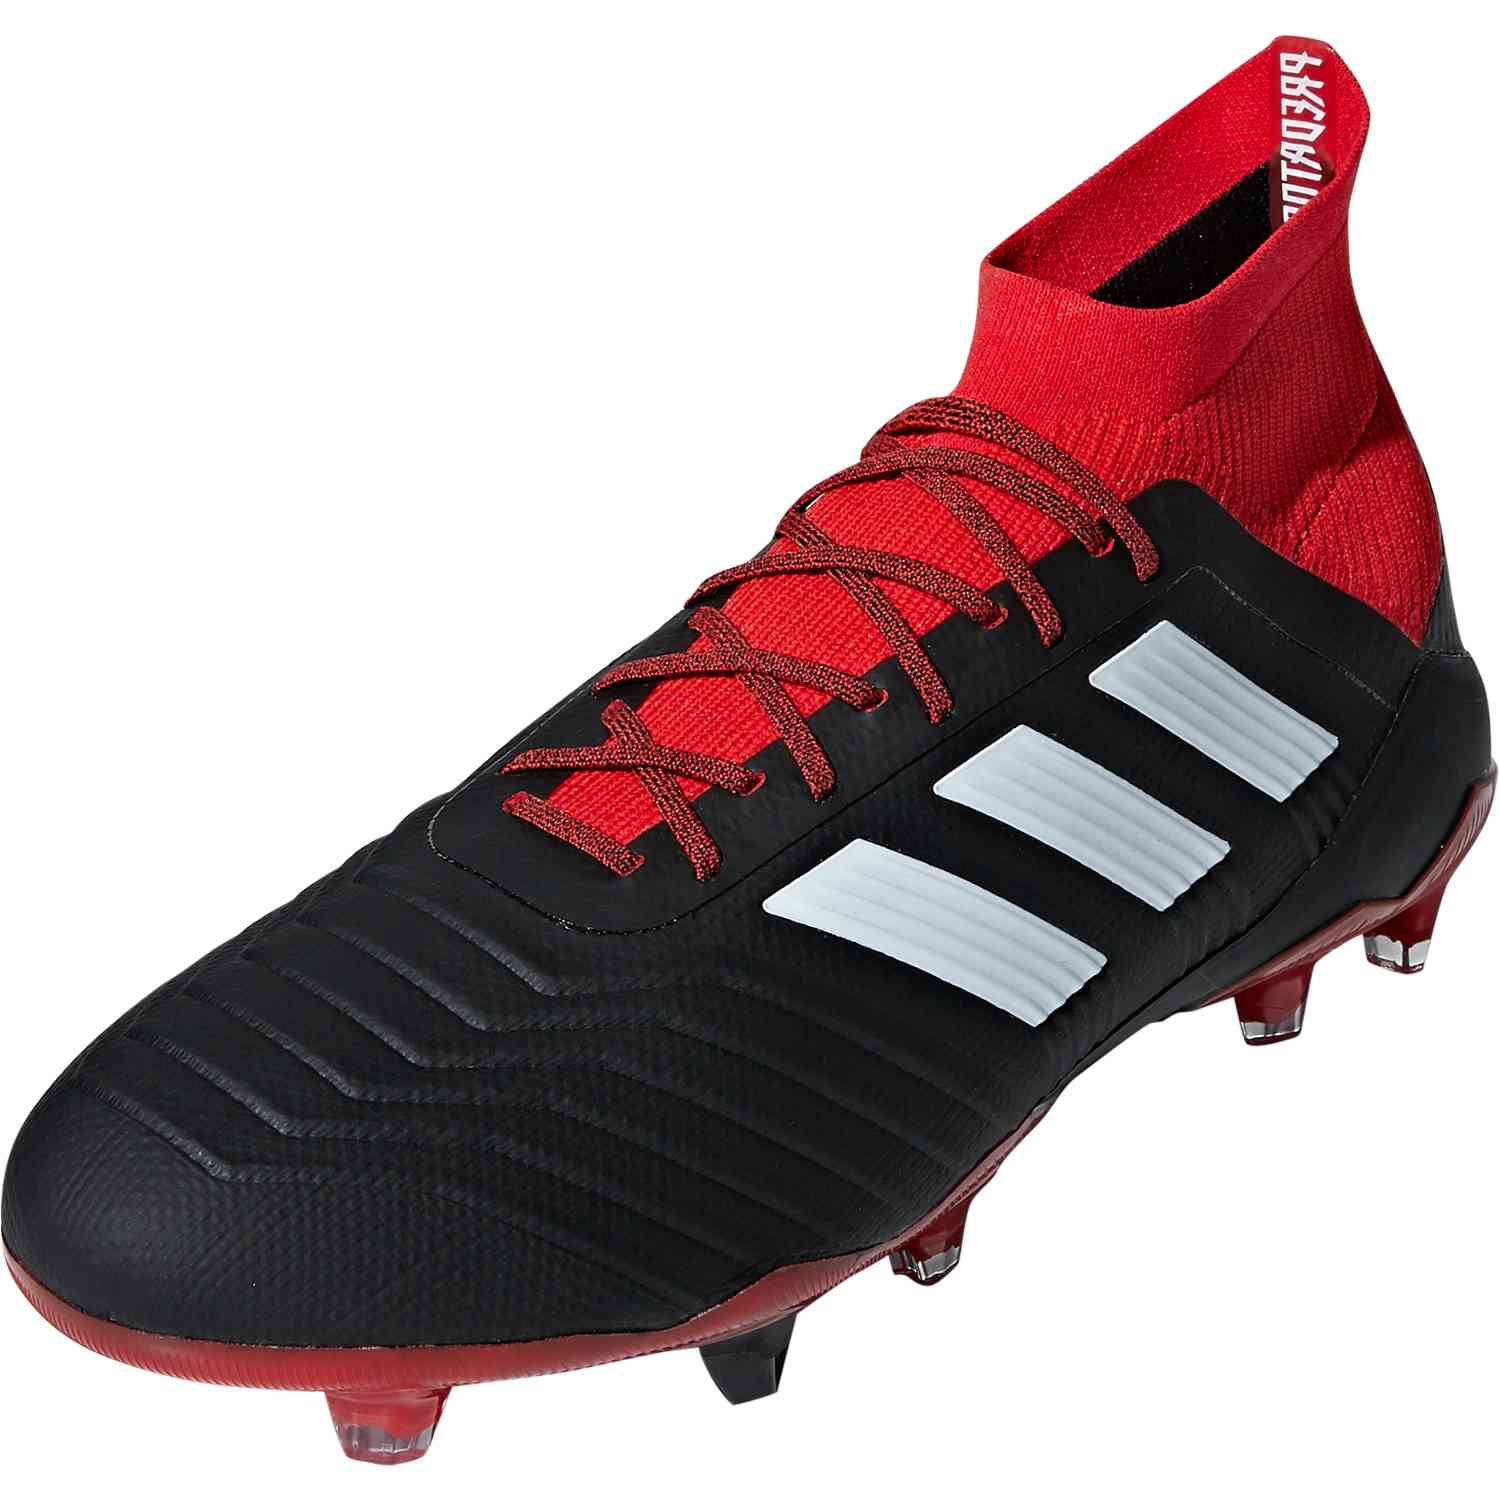 adidas predator black and red